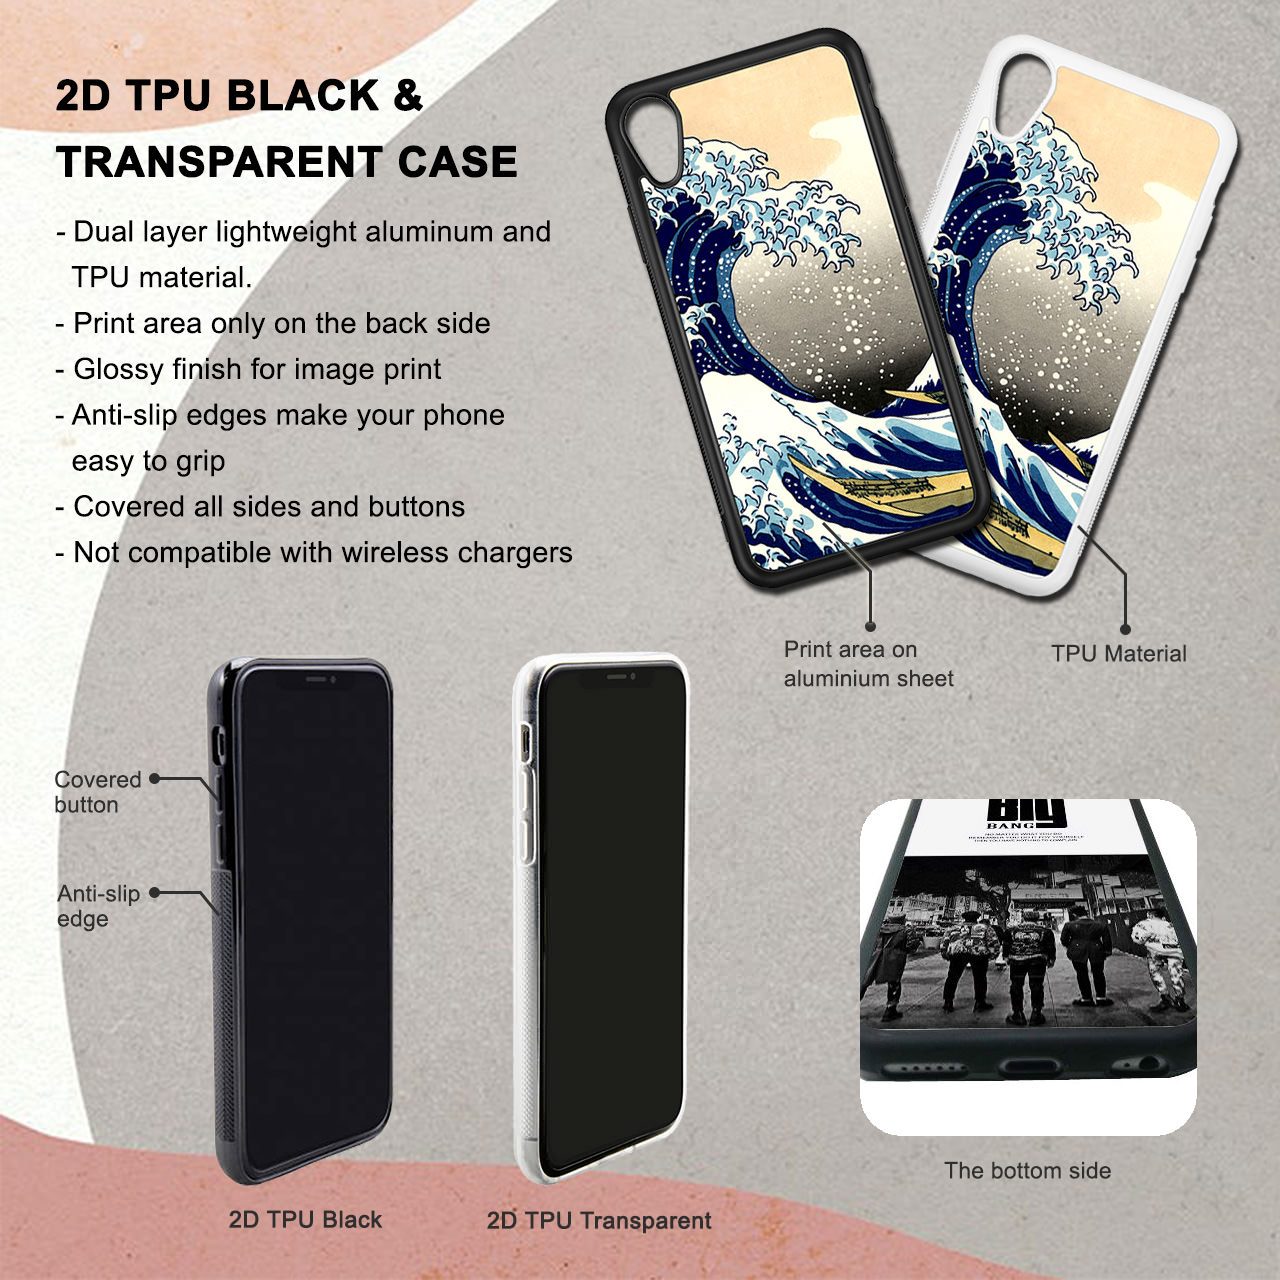 Black Snake Skin Texture iPhone 6/6S Case